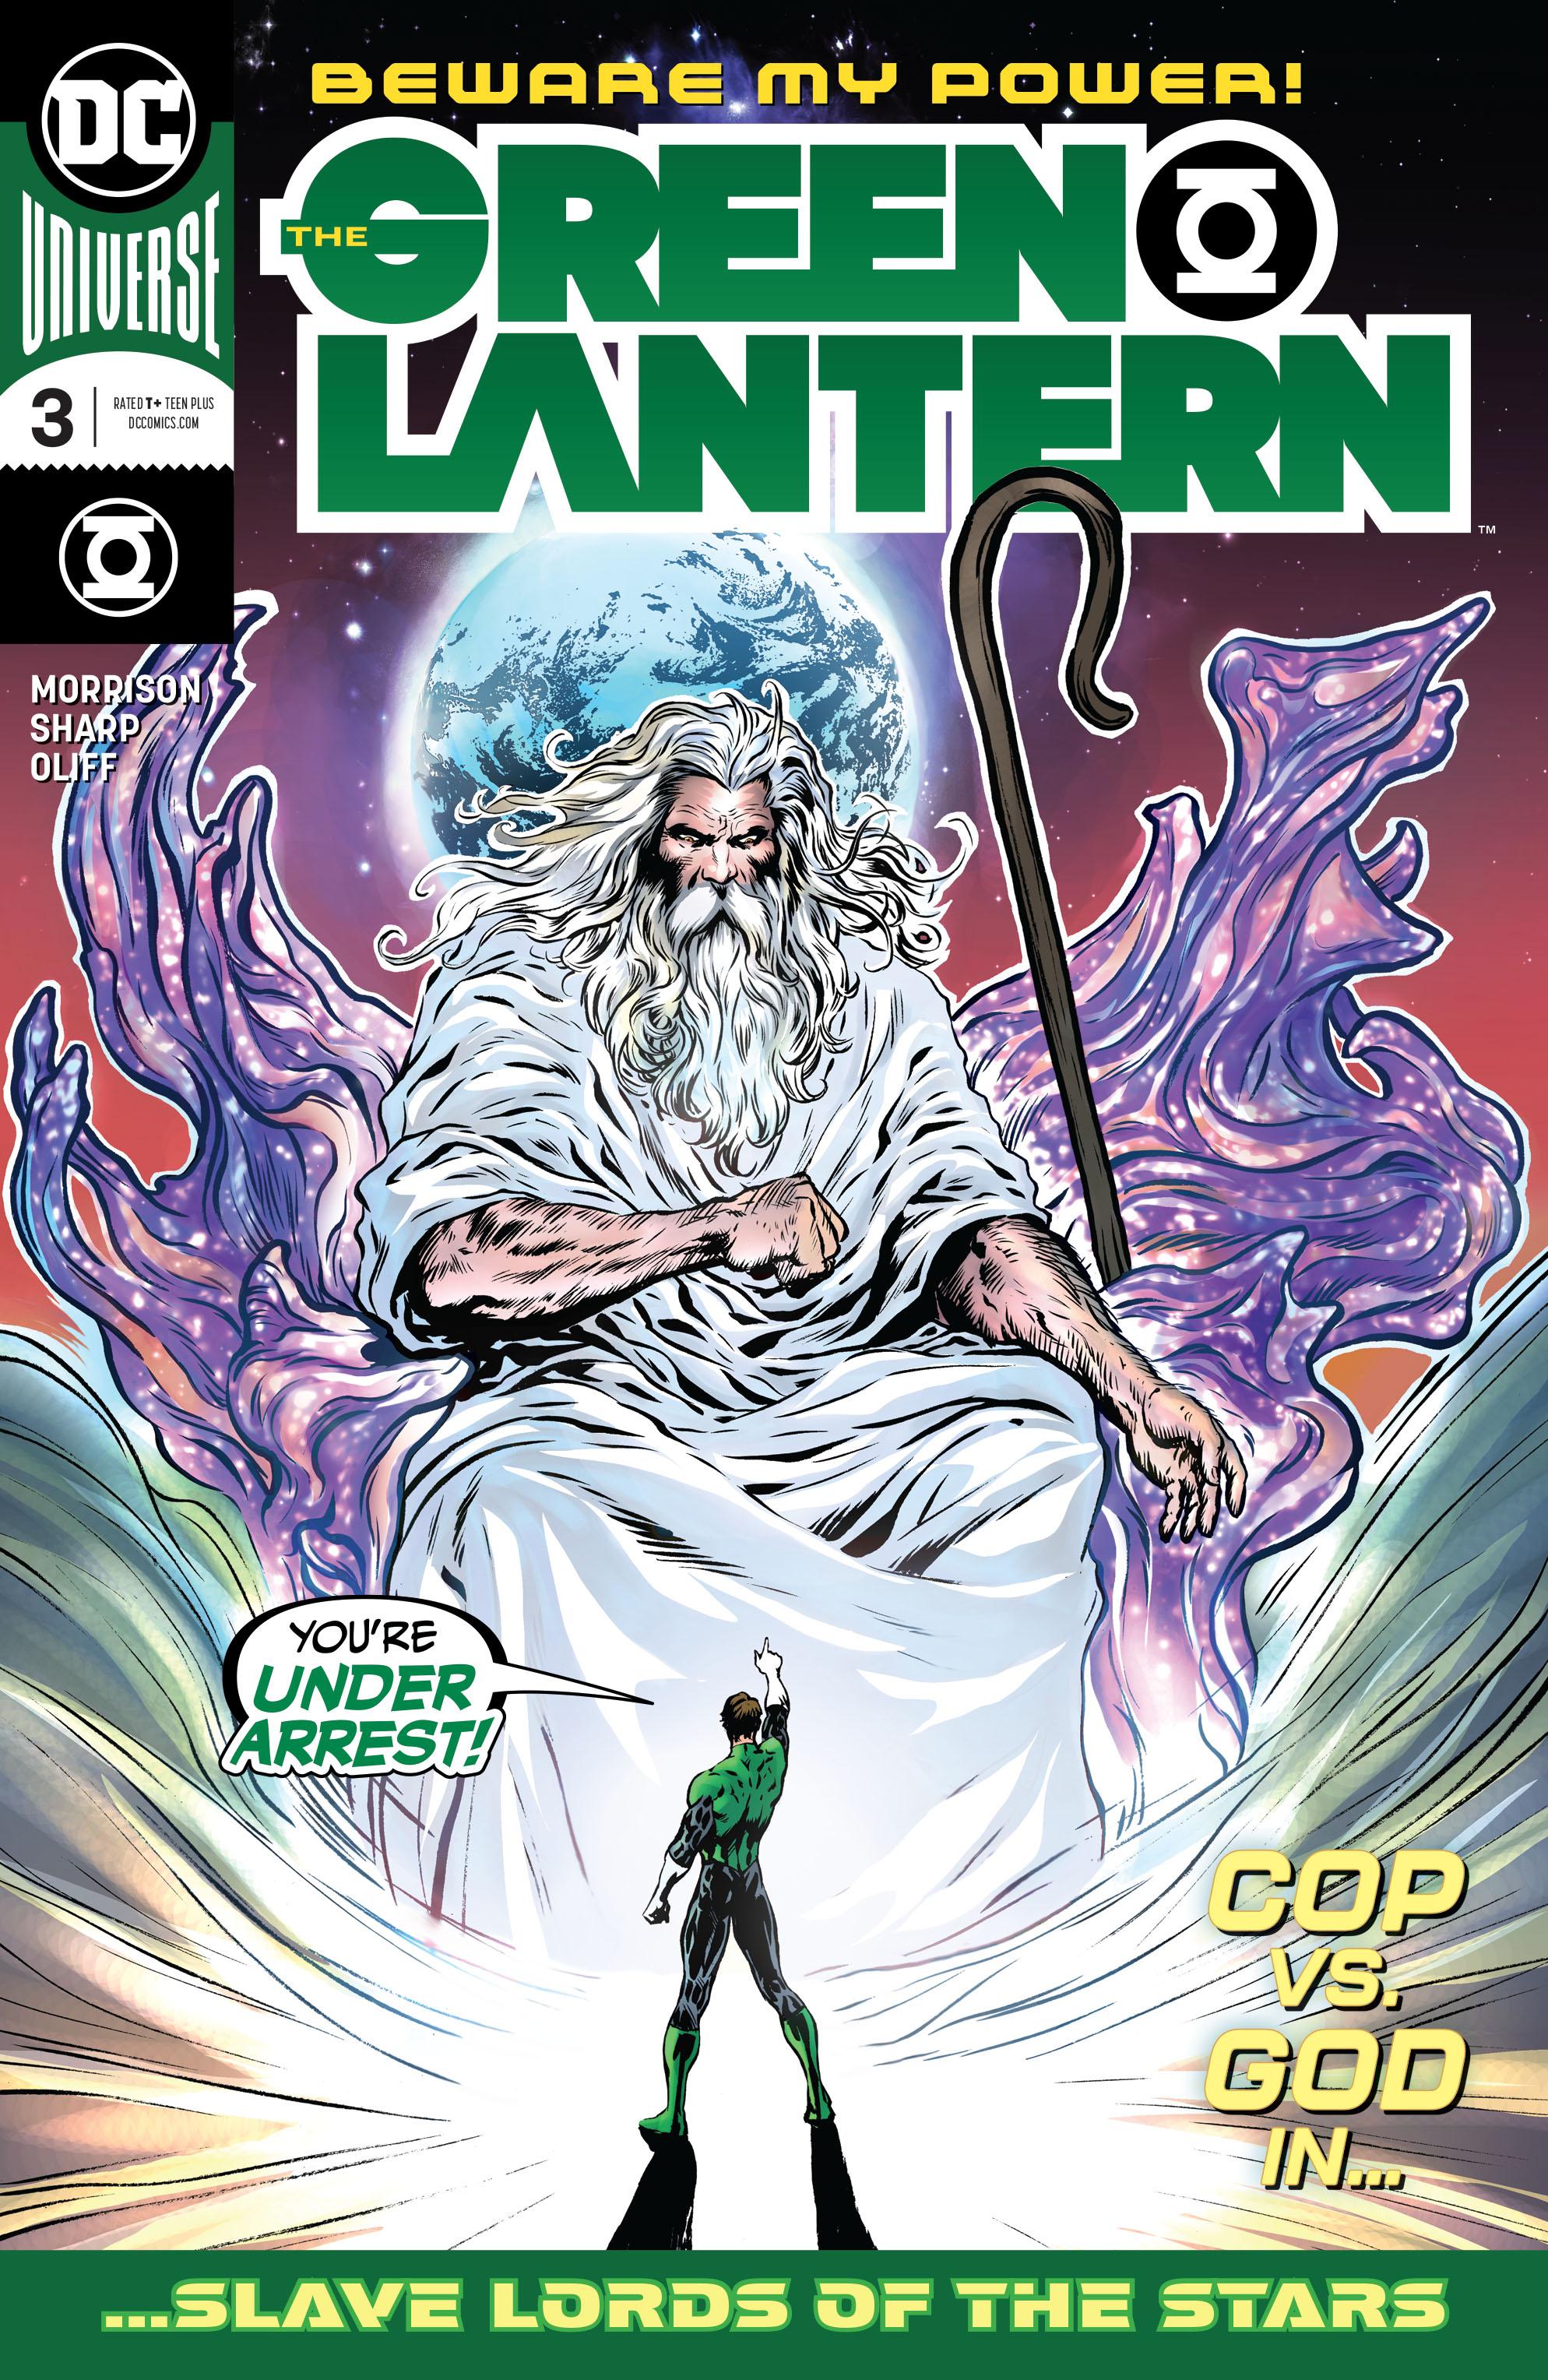 The Green Lantern Vol. 1 #3